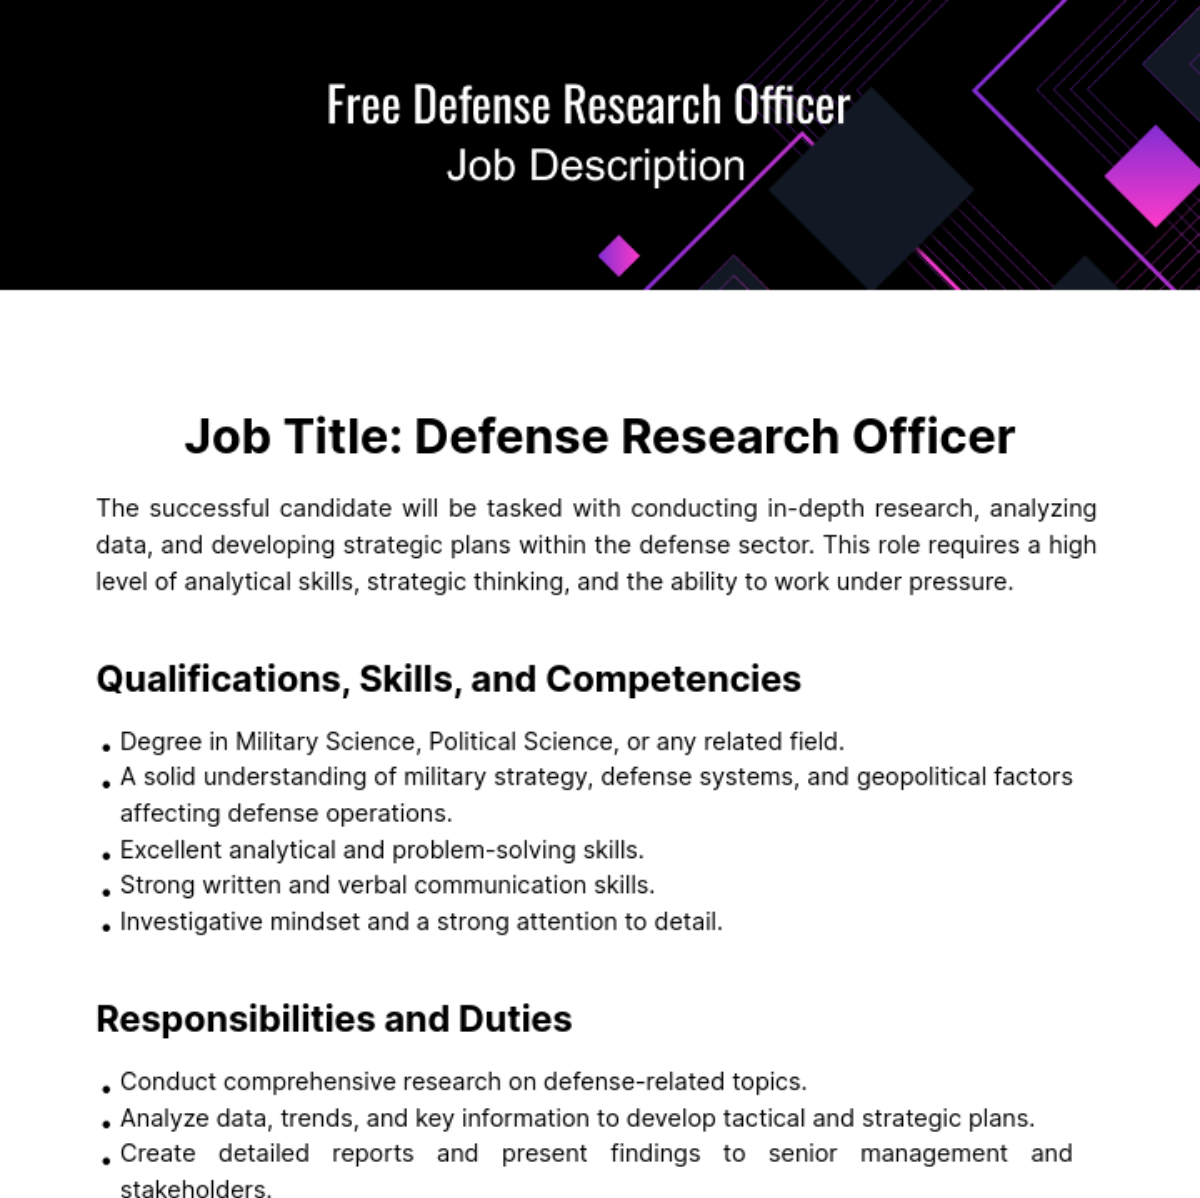 Free Defense Research Officer Job Description Template